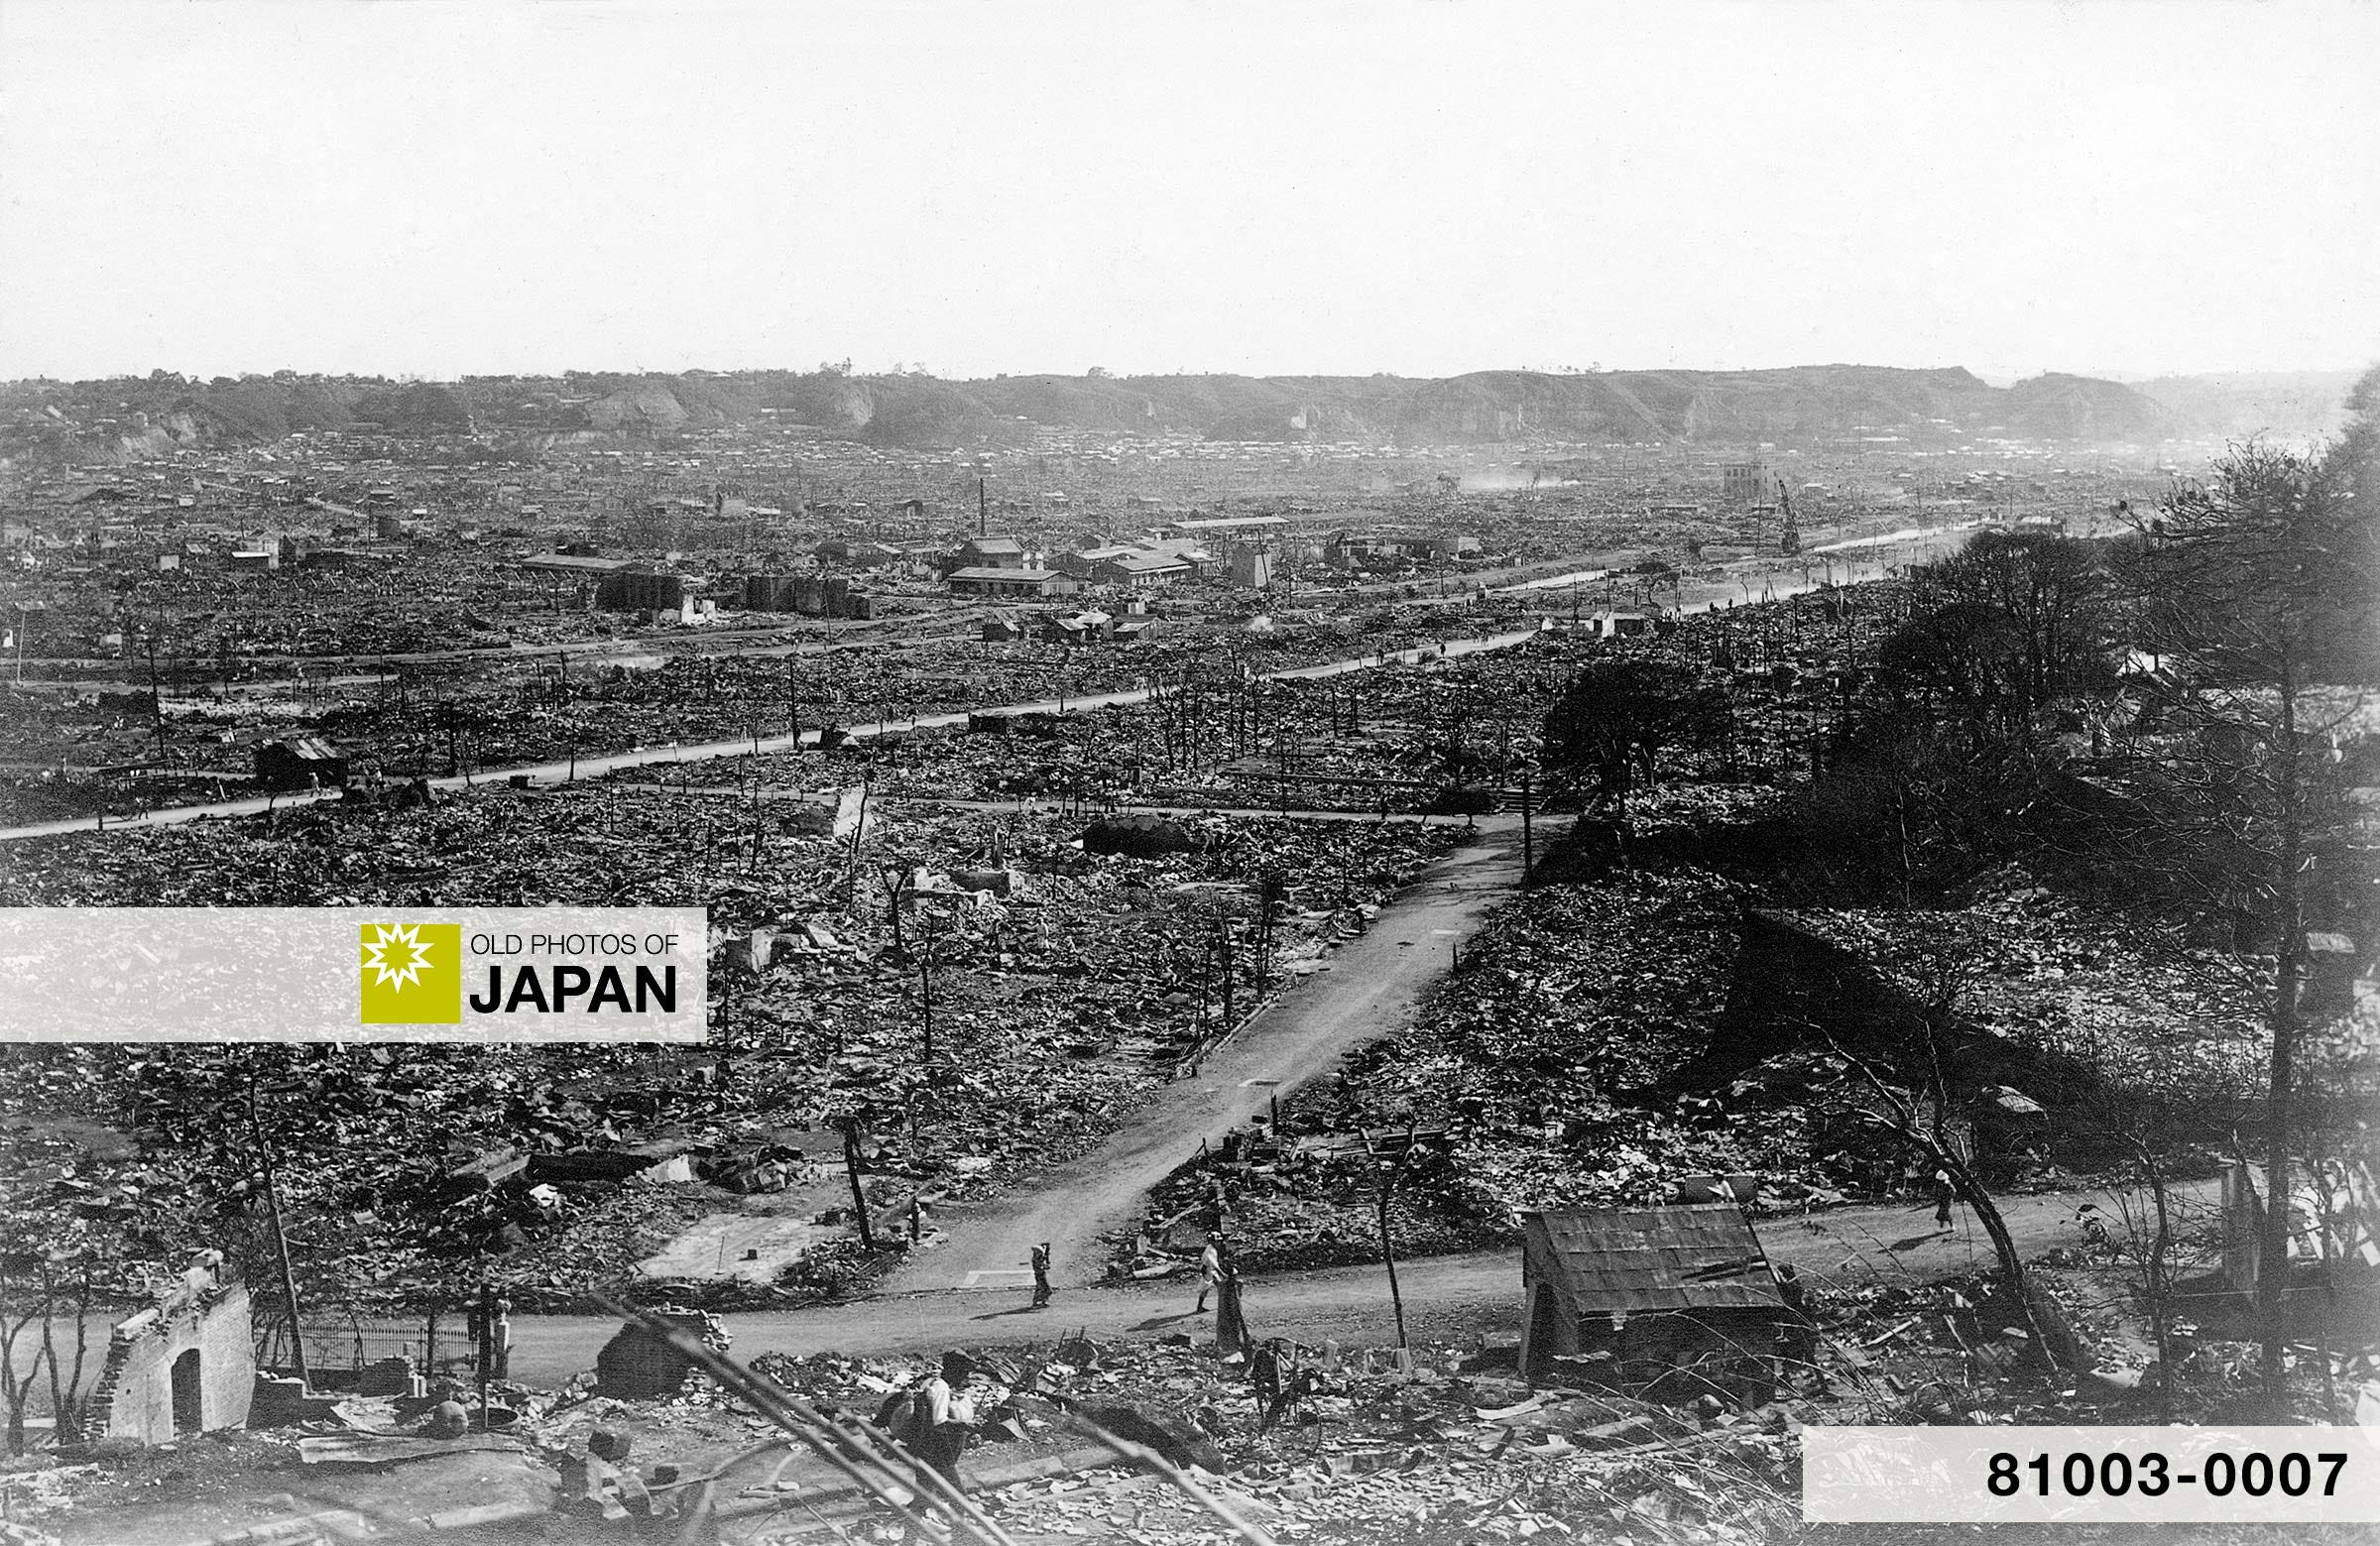 The ruins of Yokohama after the Great Kanto Earthquake of September 1, 1923